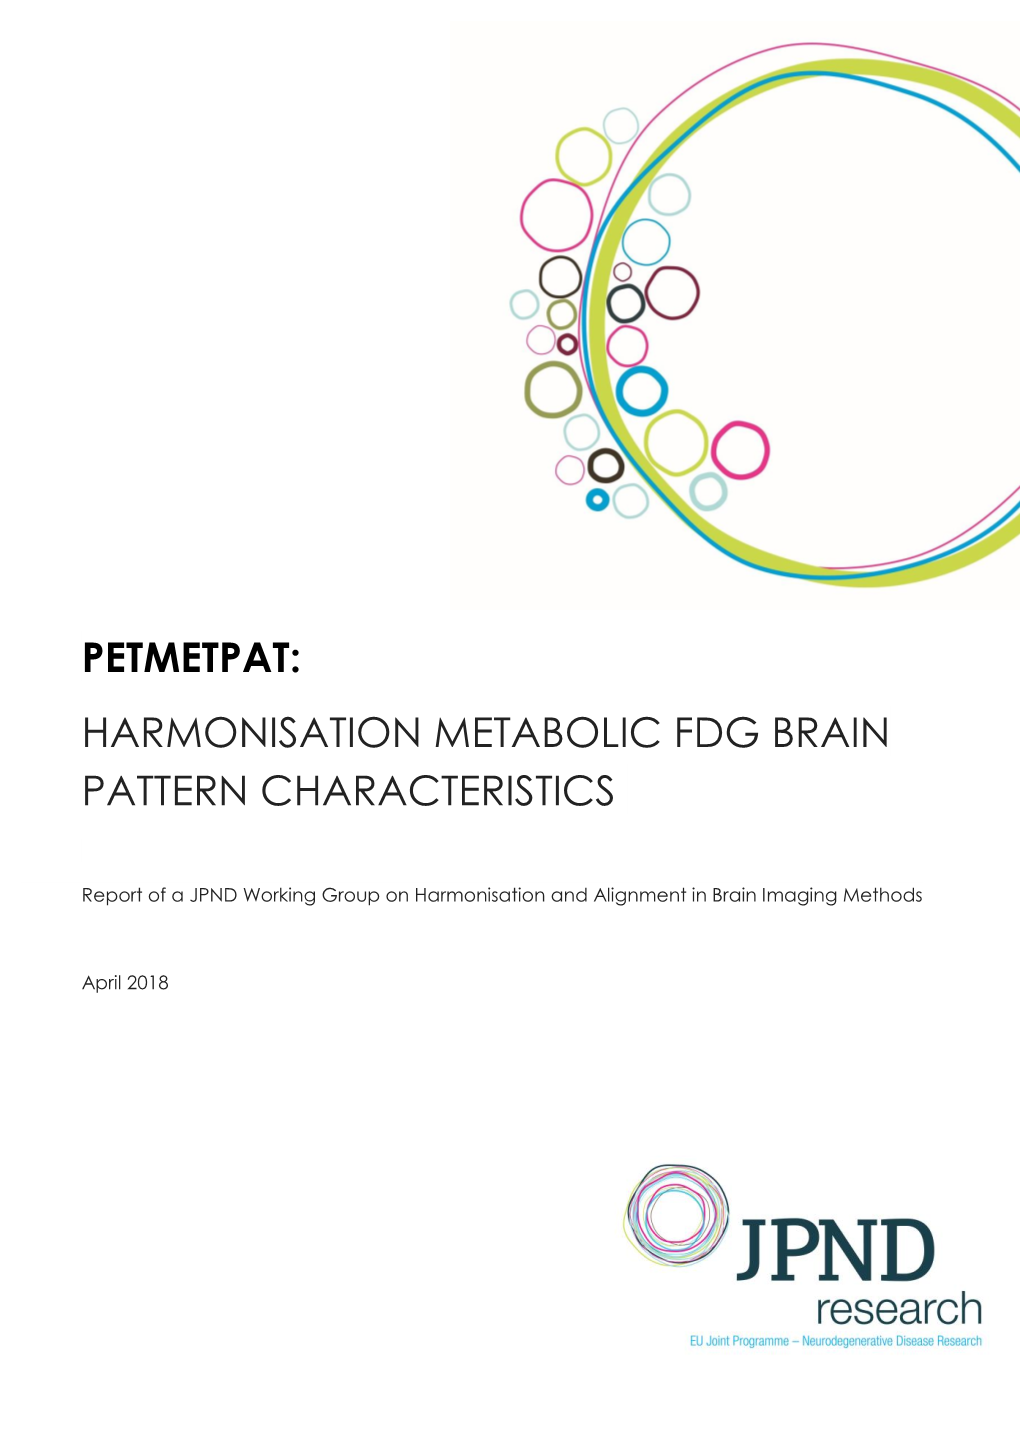 Petmetpat: Harmonisation Metabolic Fdg Brain Pattern Characteristics